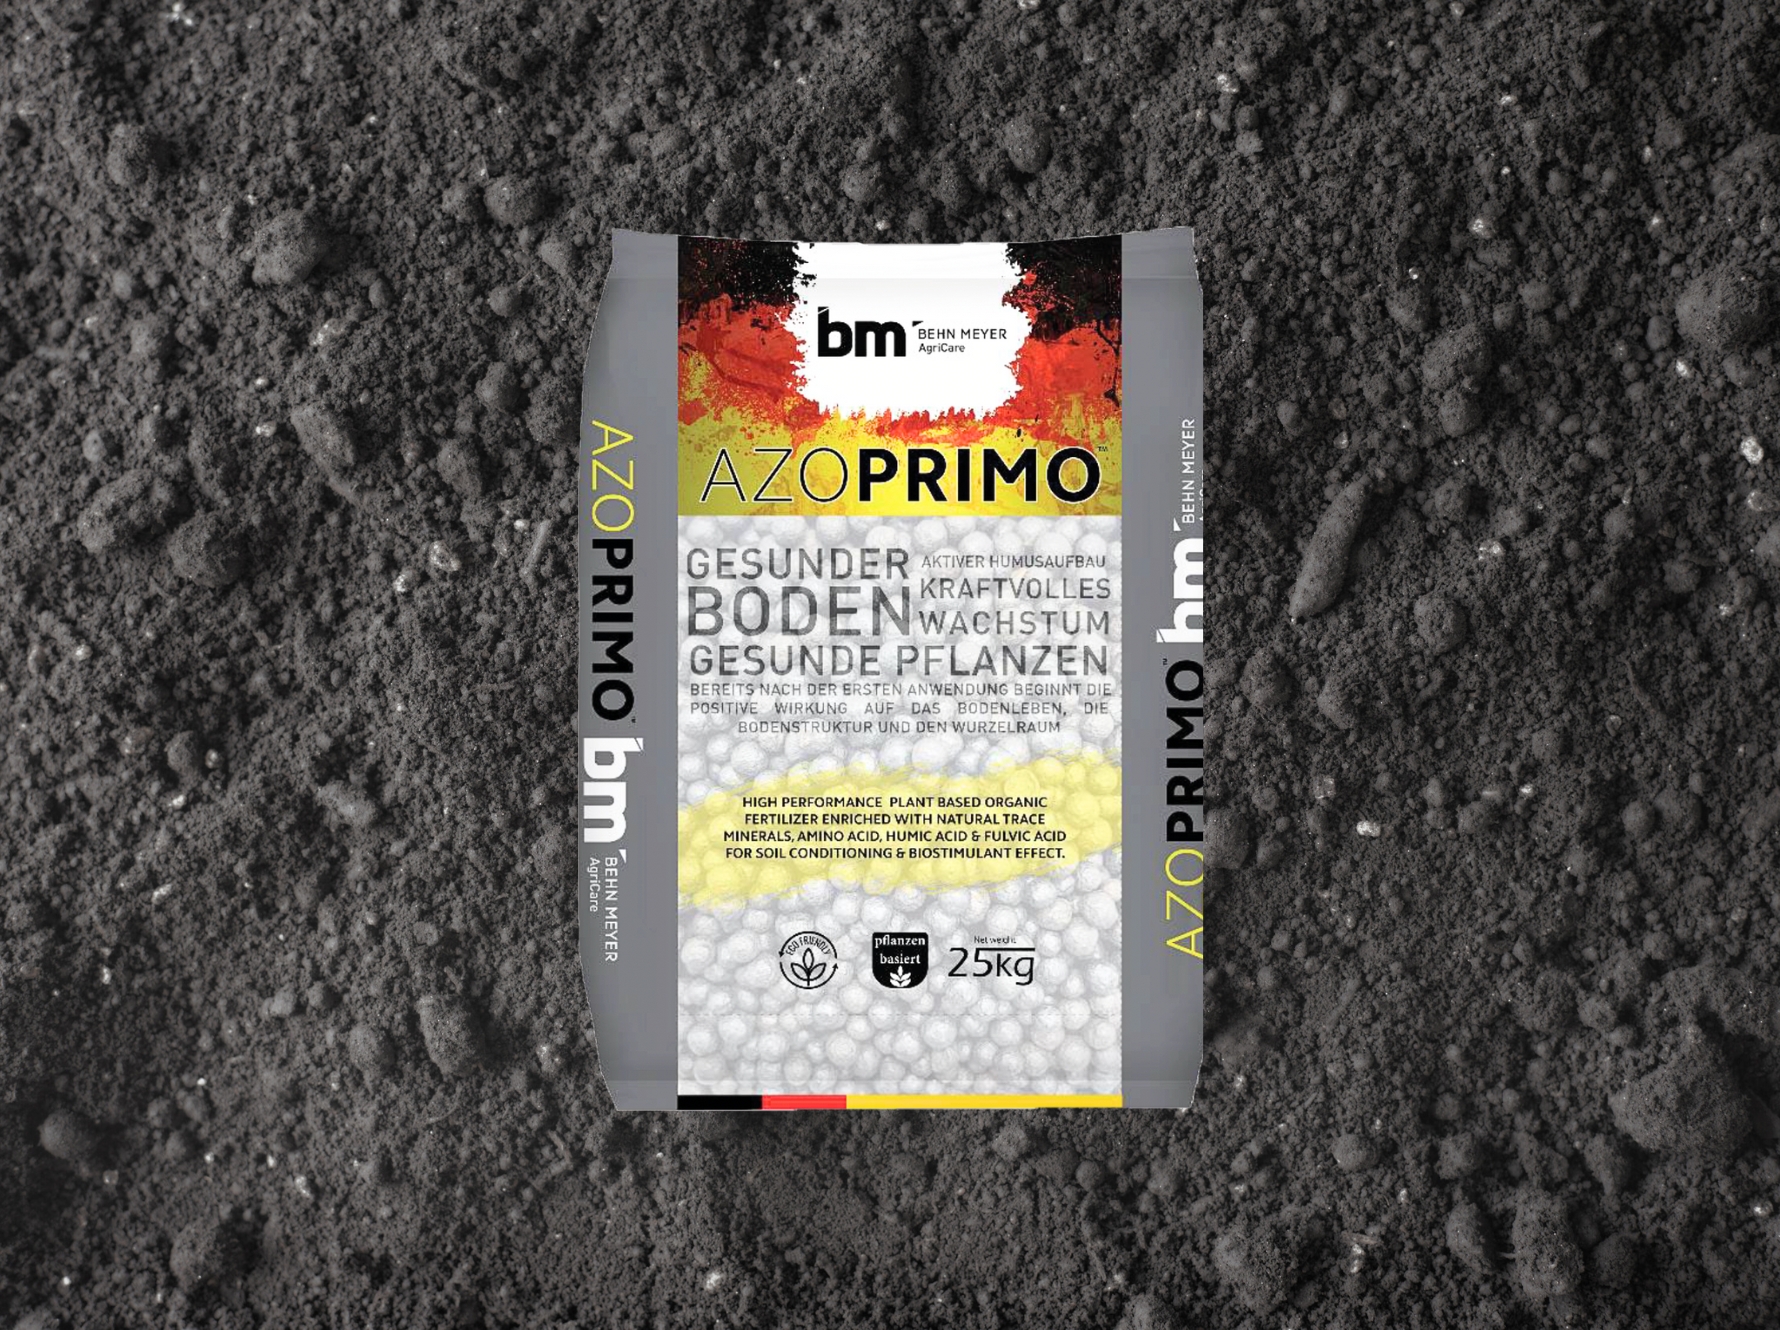 AZOPRIMO from Behn Meyer AgriCare on black soil or gravel background.